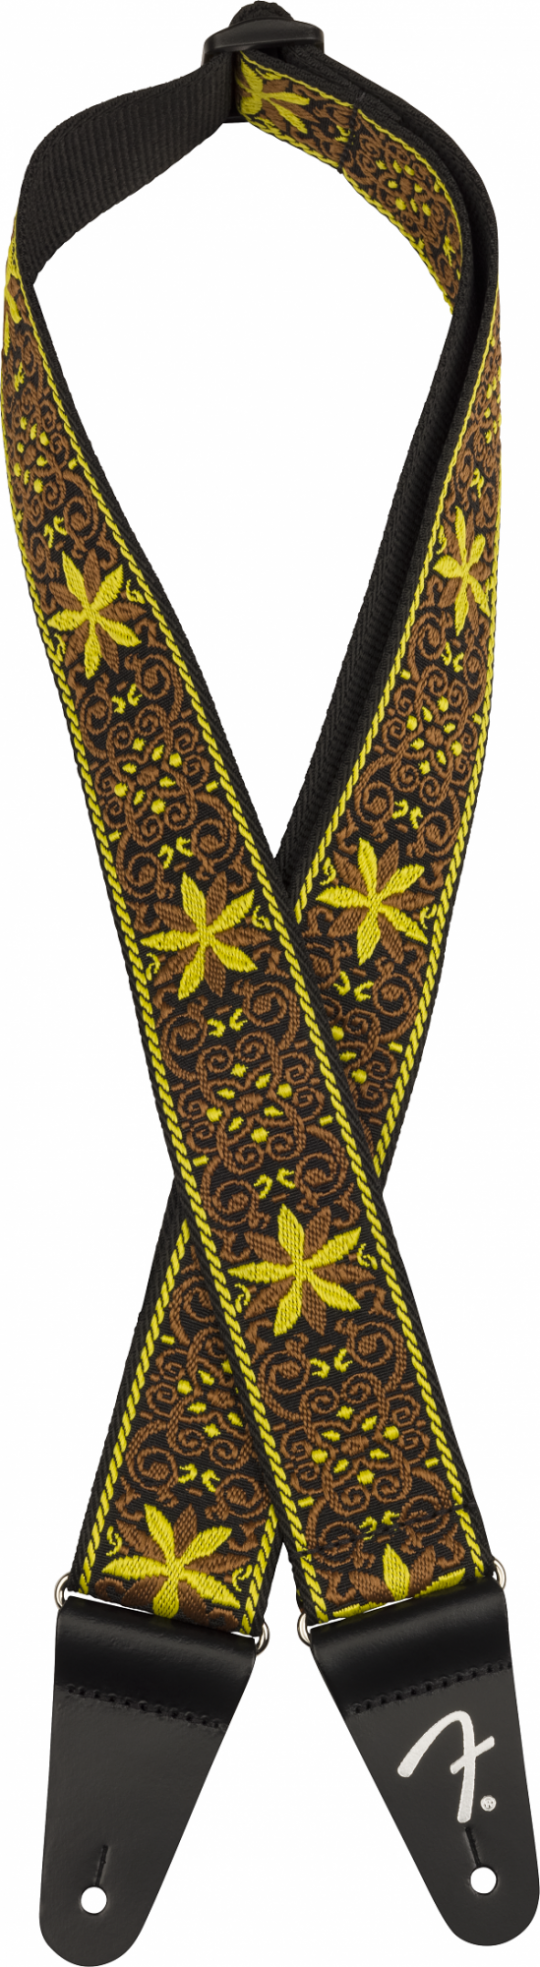 fender-pasadena-strap-yellow-wallflower-1676458754.png